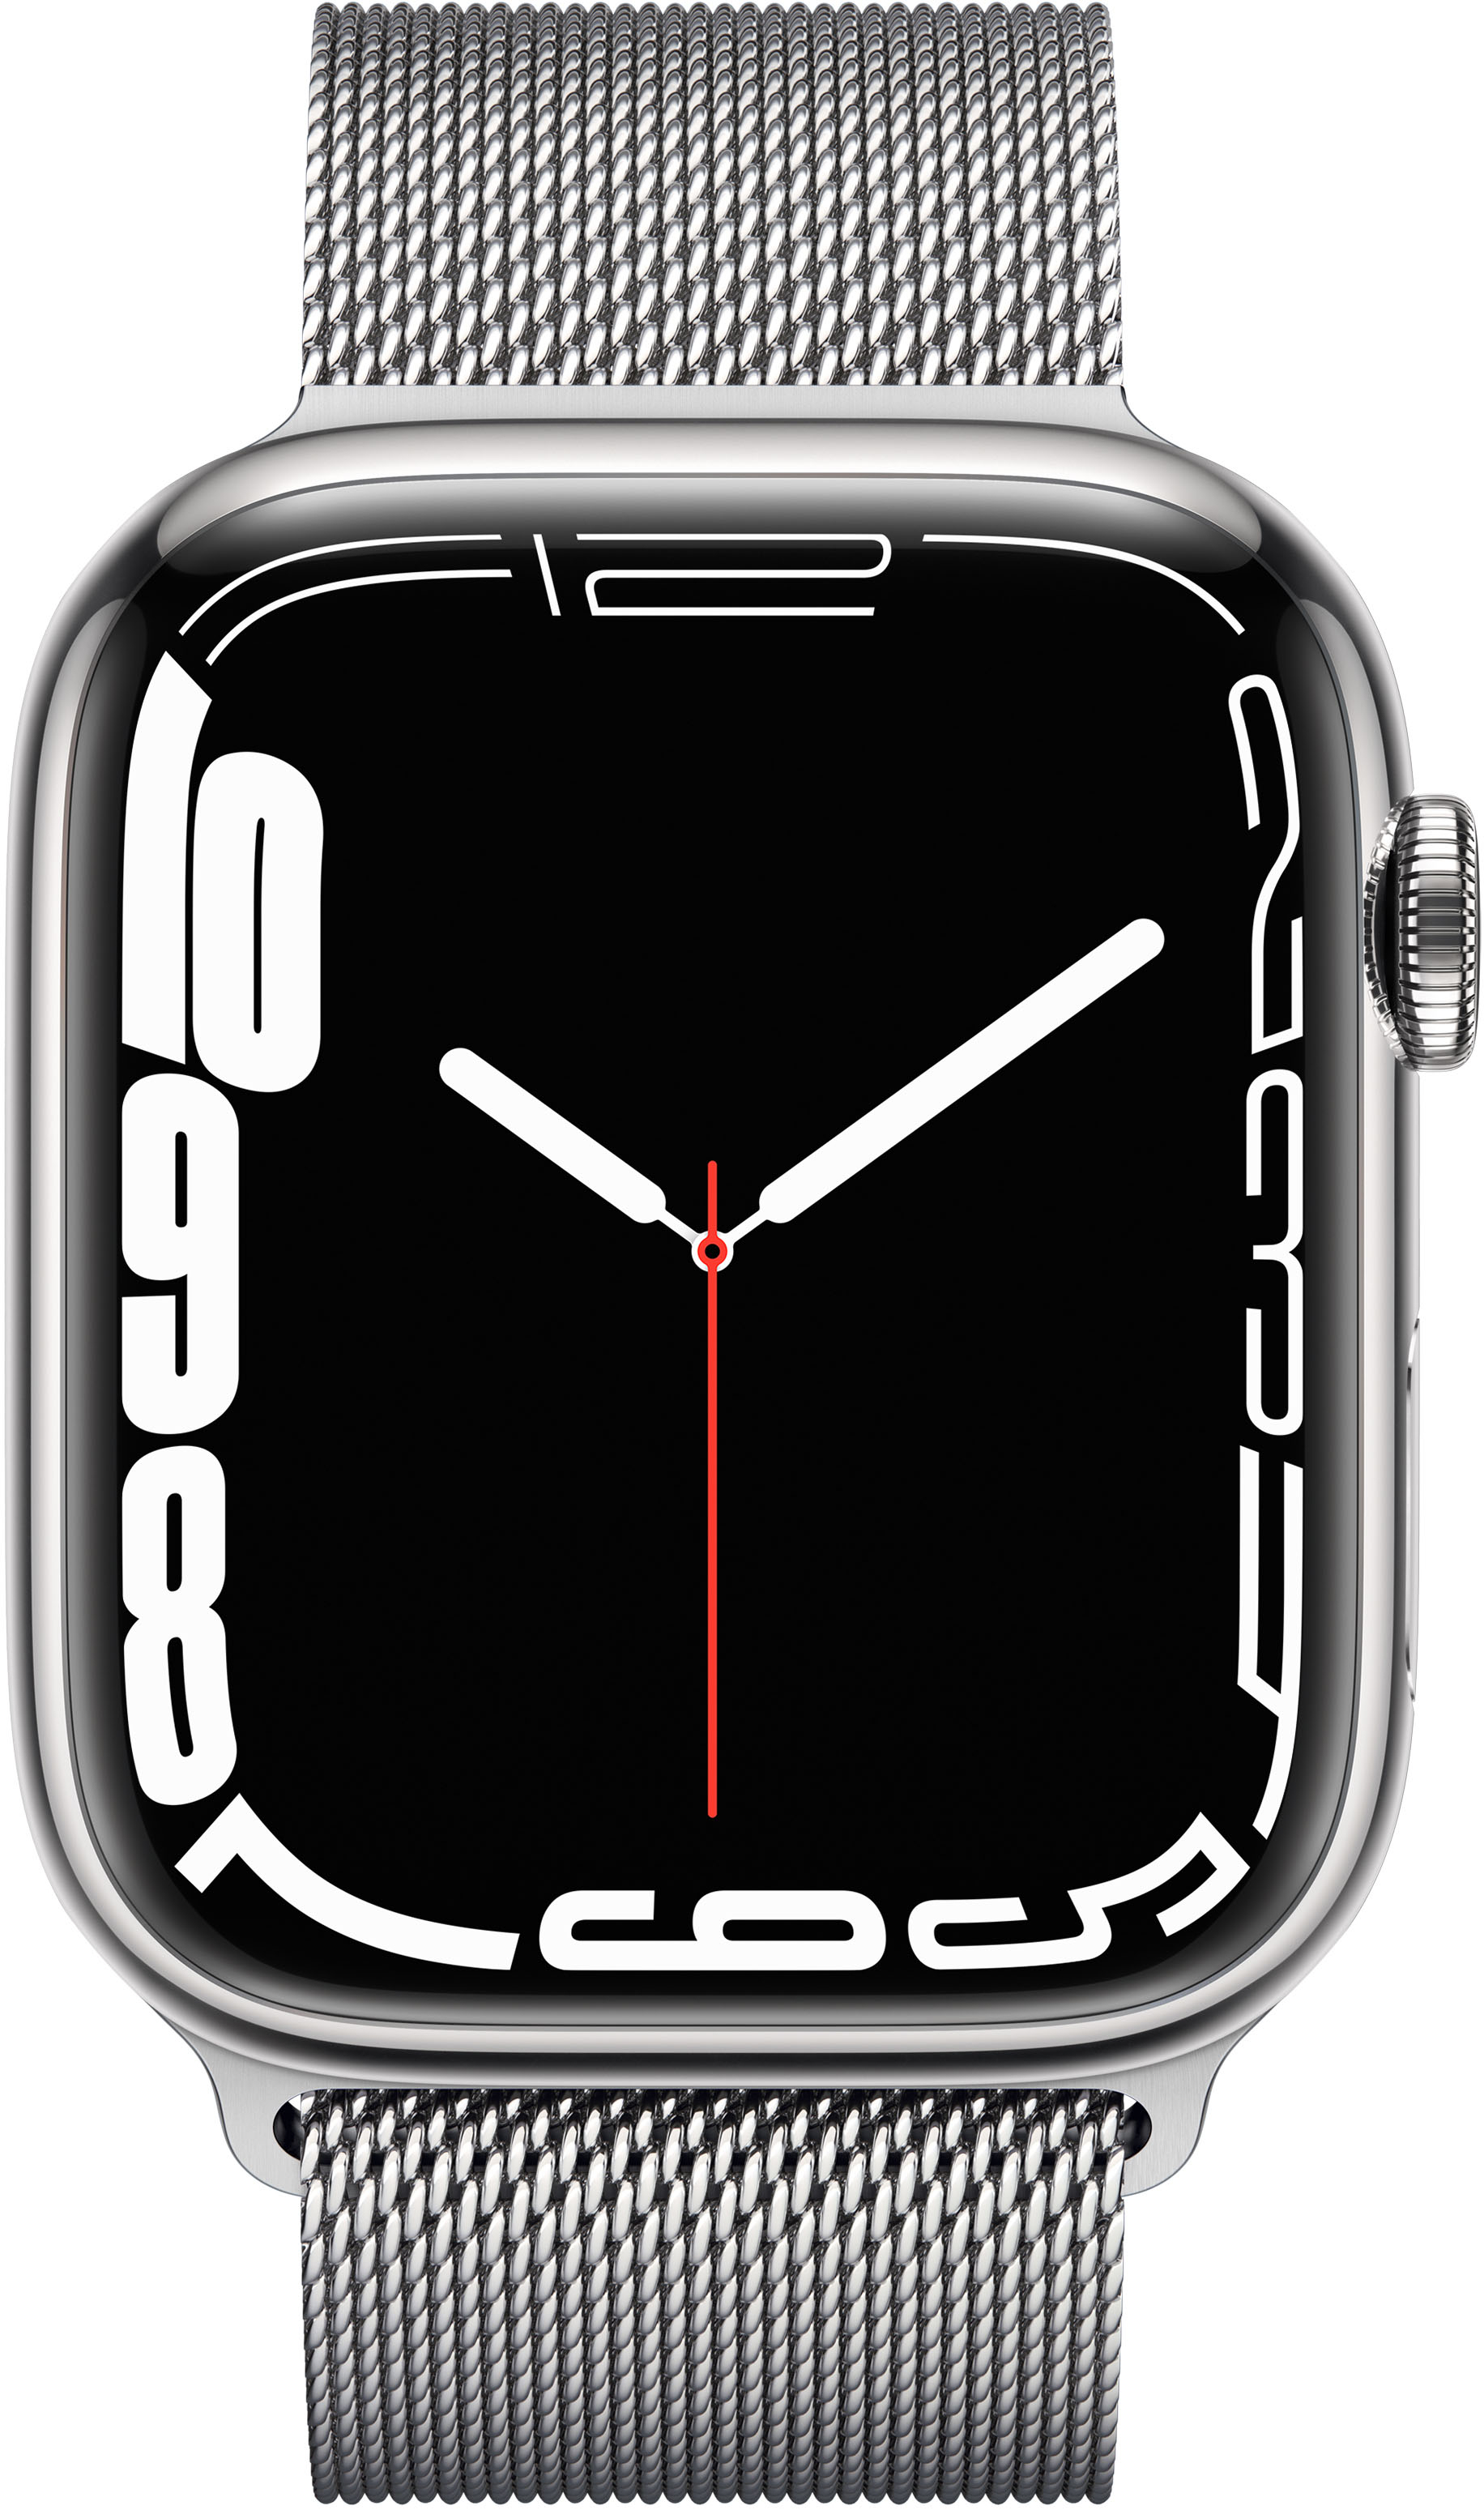 Apple Watch7 ステンレスシルバー45mm | www.myglobaltax.com